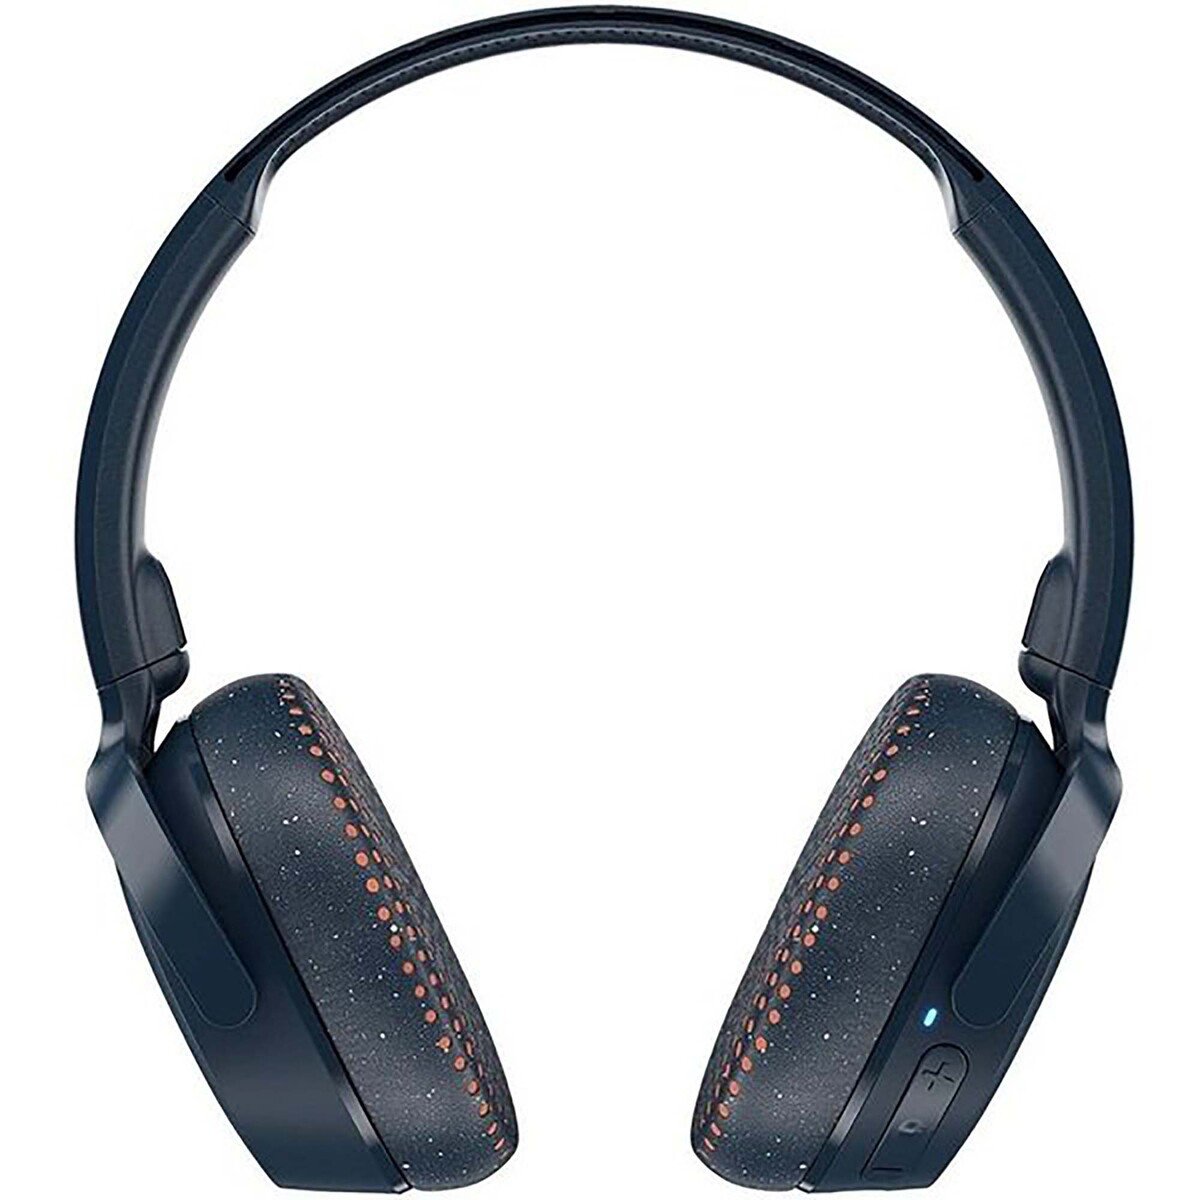 Skullcandy S5PXW-L673 Riff Wireless On Ear Headset Blue/Sunset